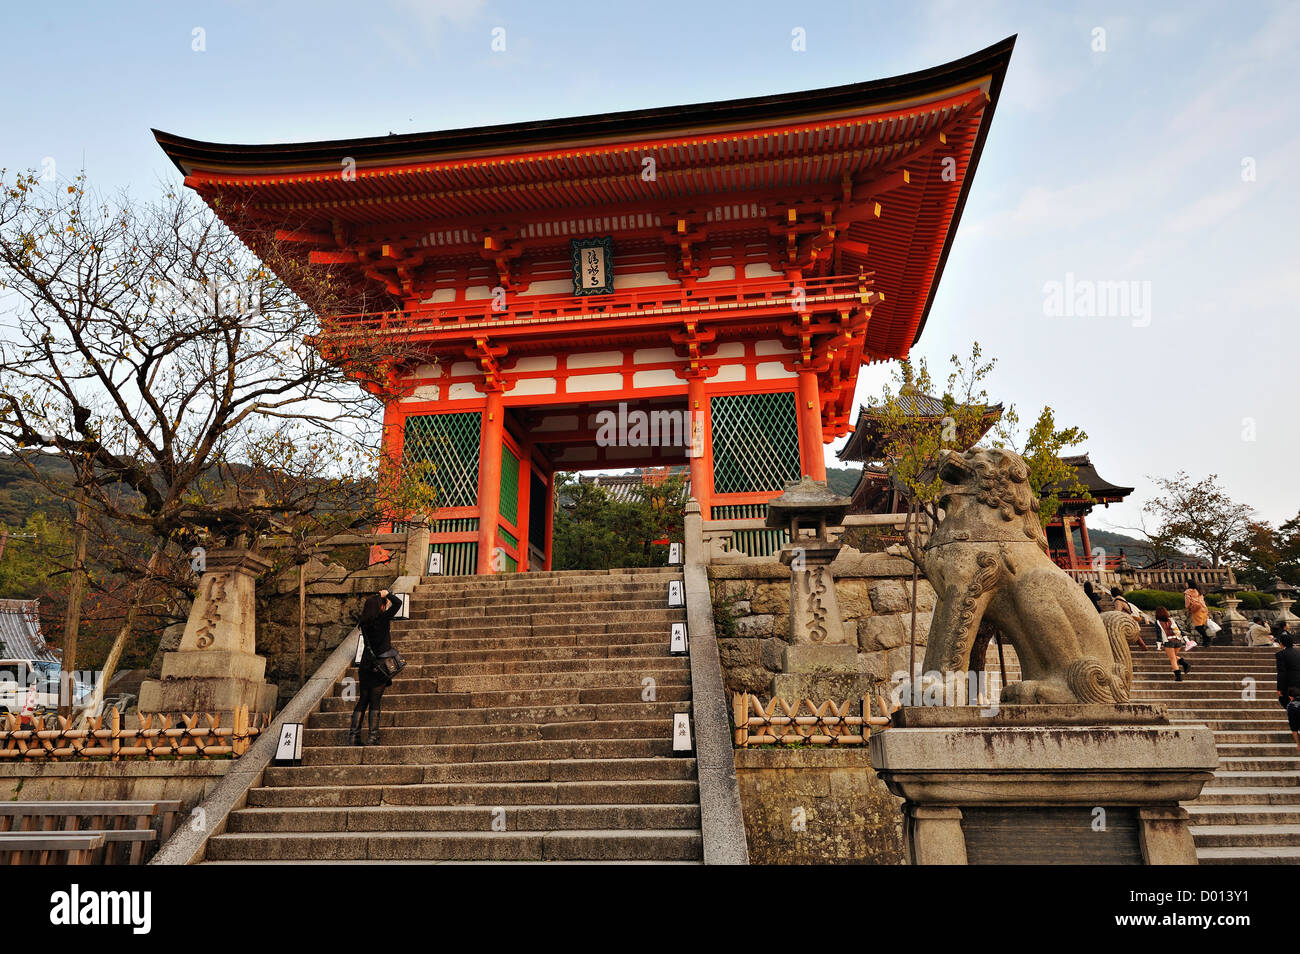 Ceremonial gateway or entrance at Kiyomizudera temple in Kyoto, Japan Stock Photo